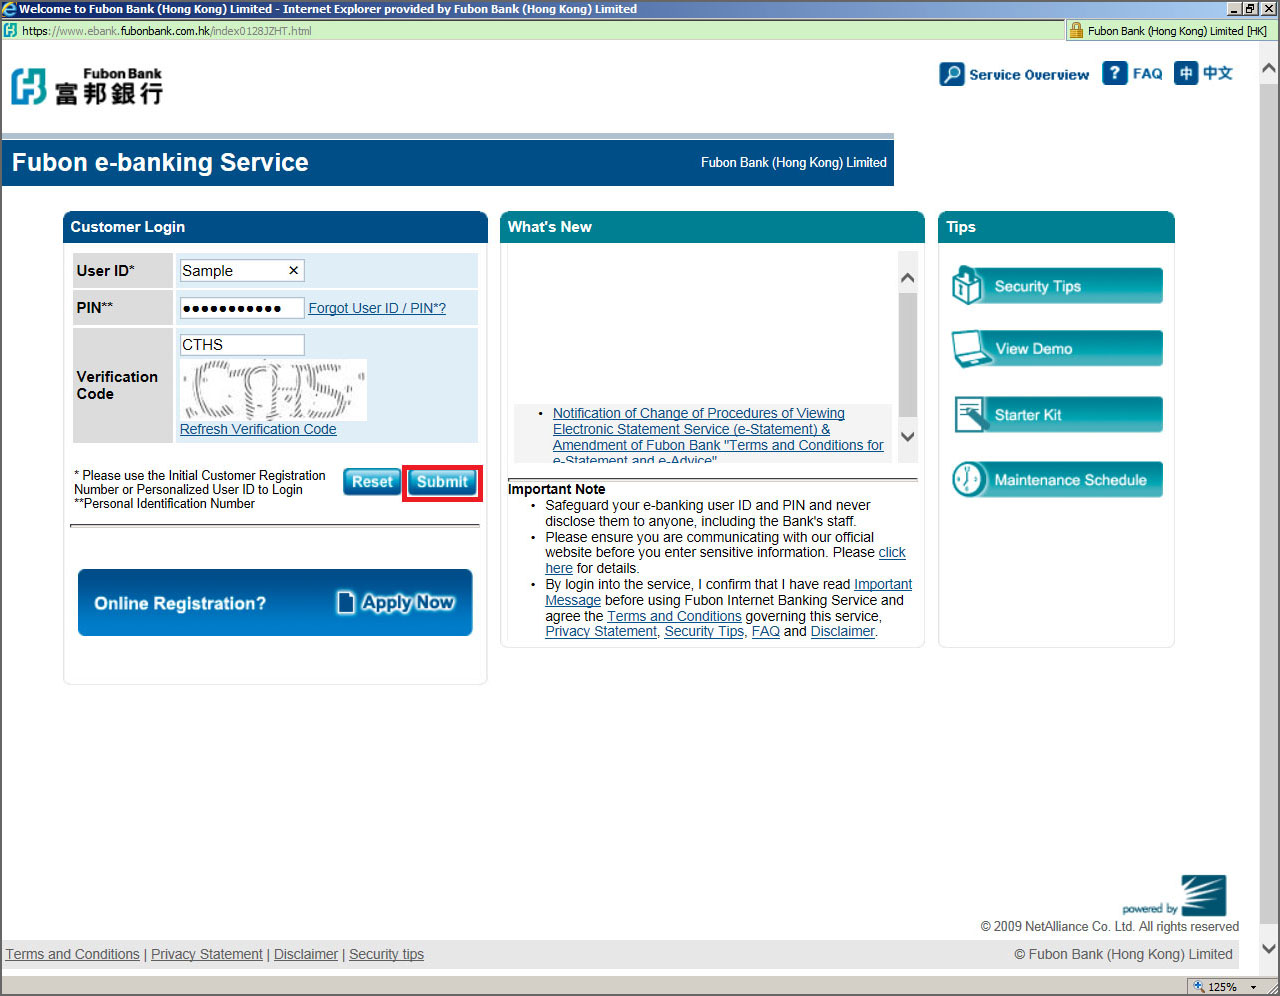 Step 1: Logon to Fubon Internet Banking service screenshot